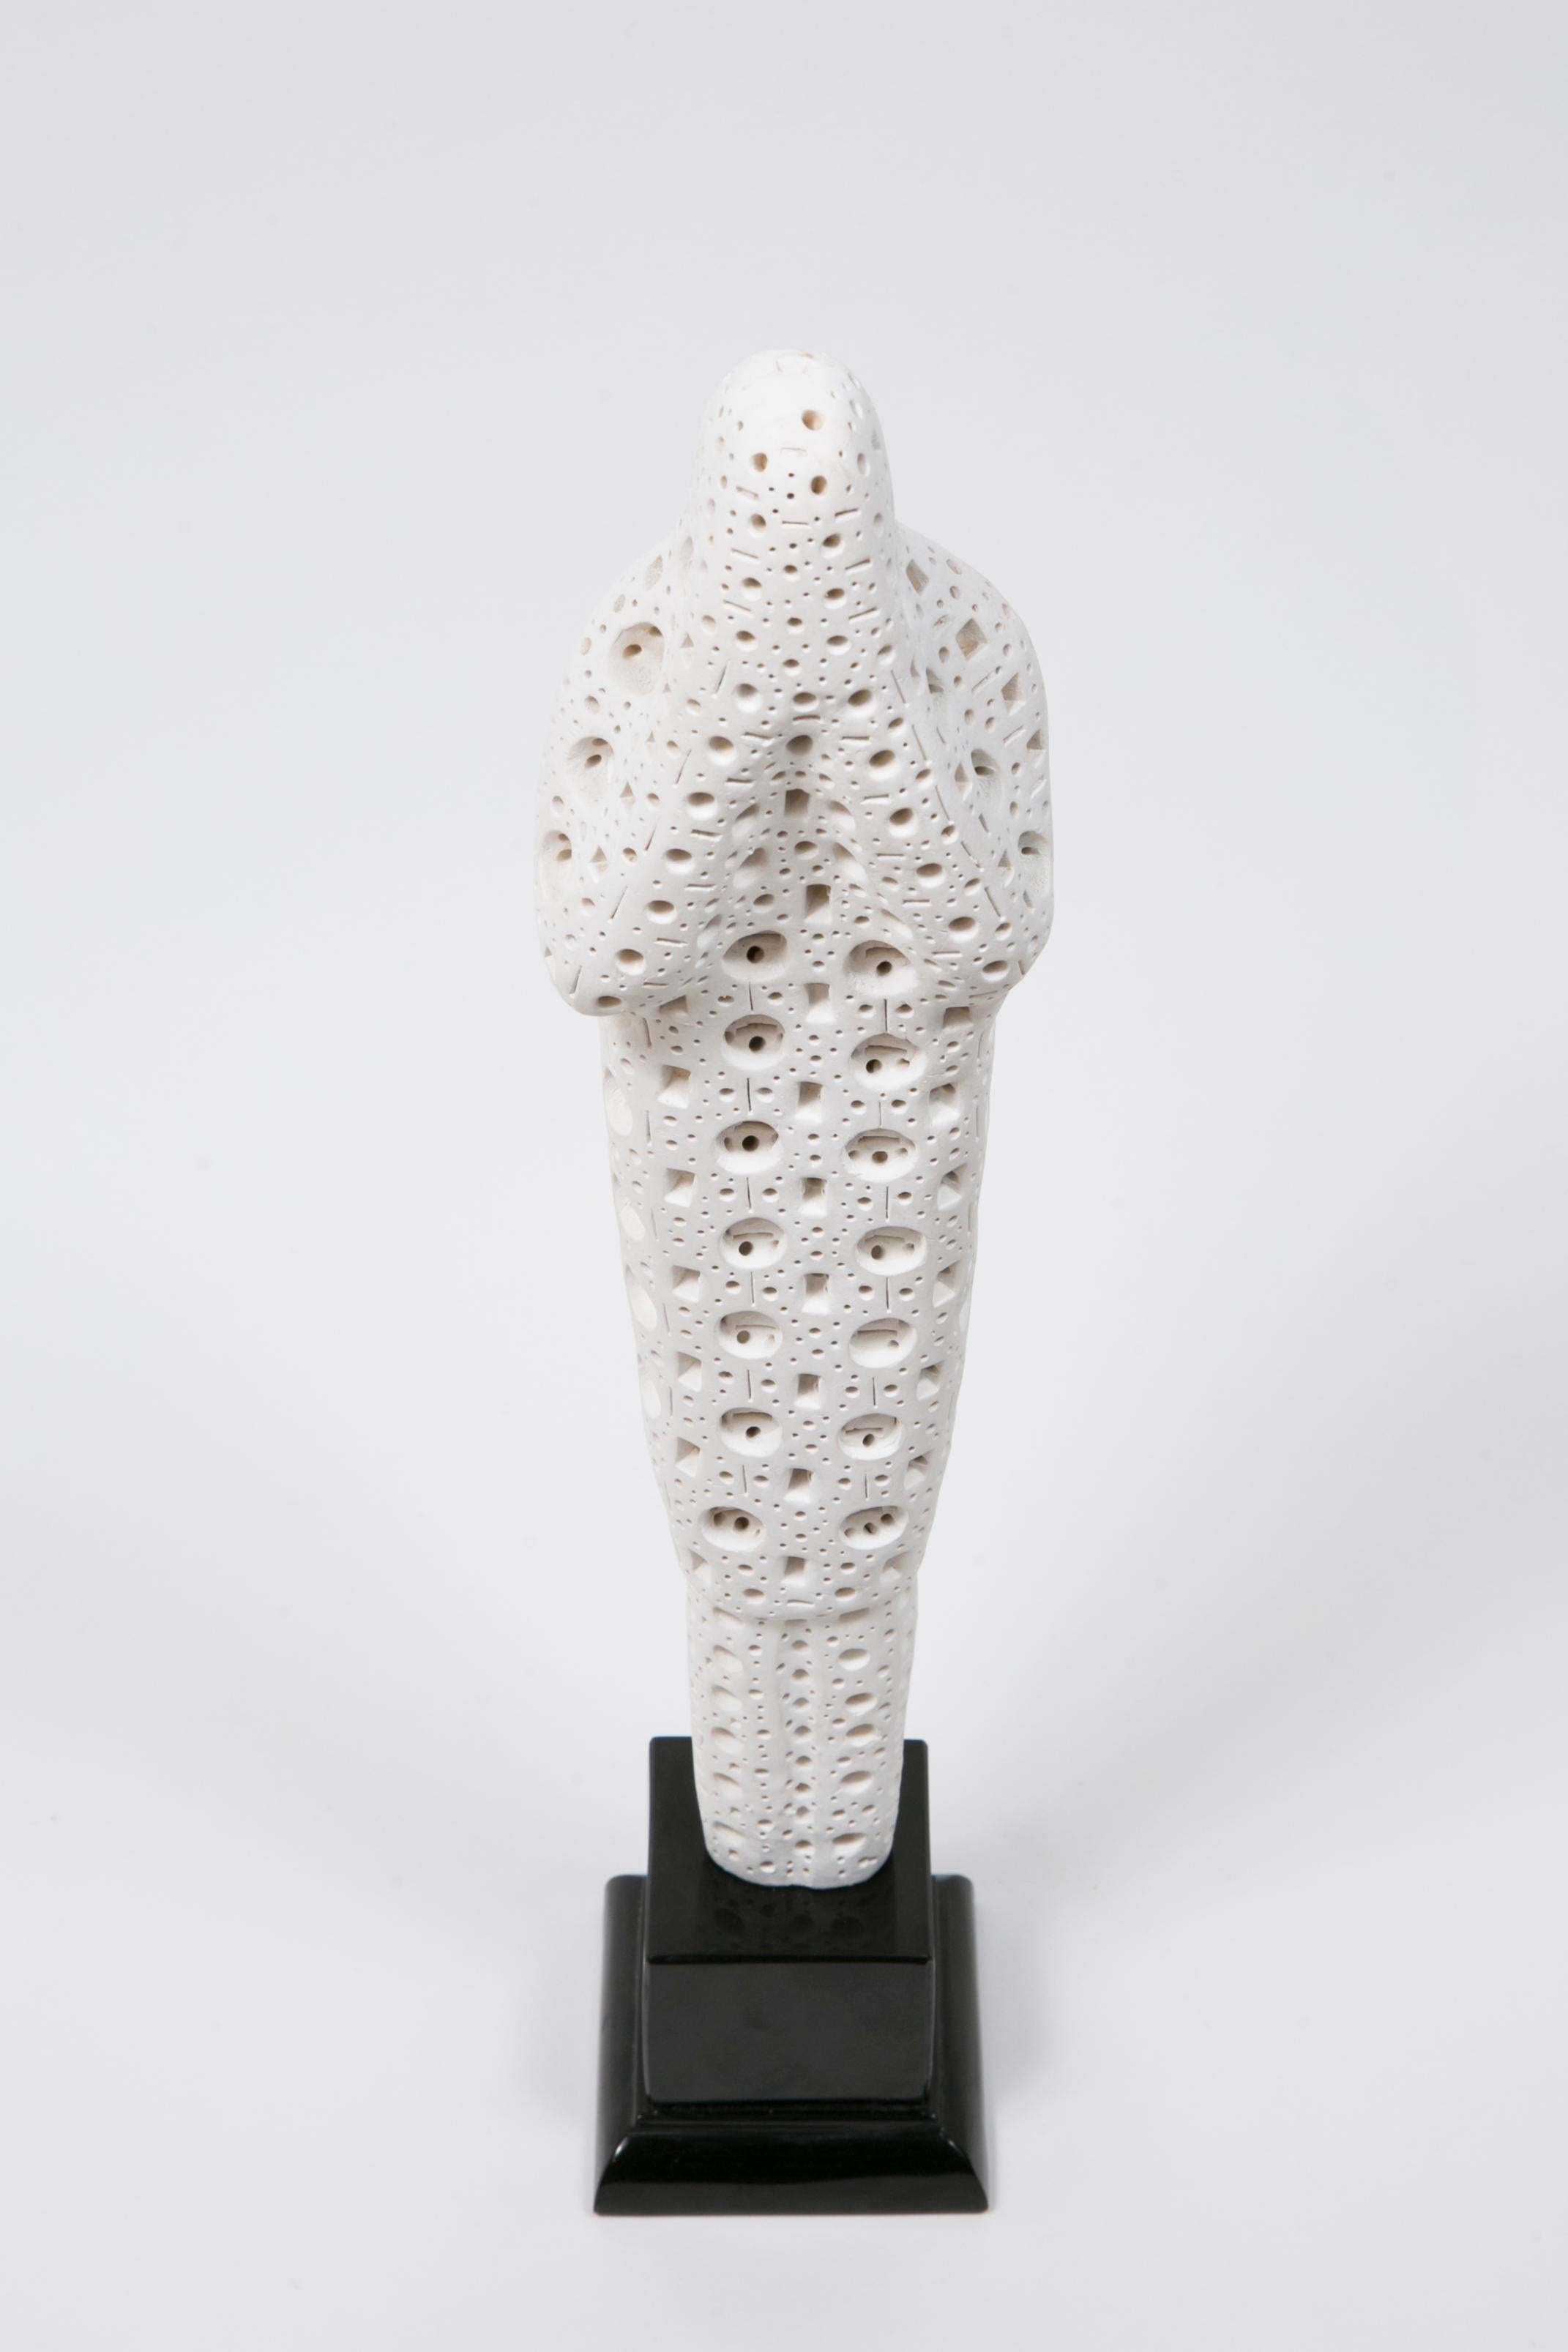 Modern White Terracotta Sculpture by Alexandre Ney